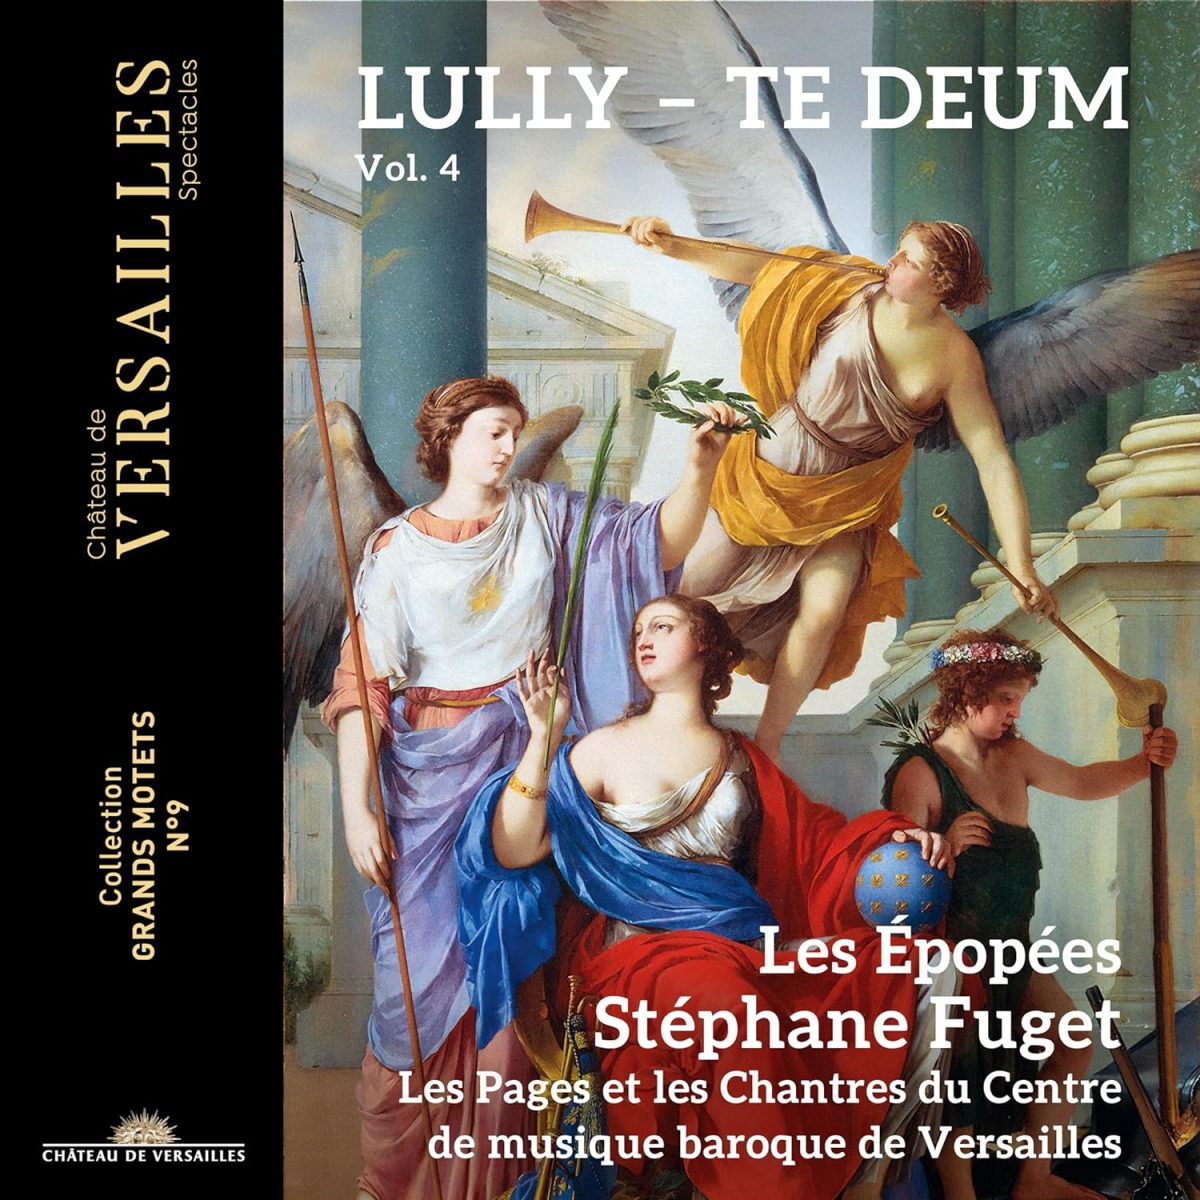 CD cover Lully Te Deum Les Epopees Stephane Fuget